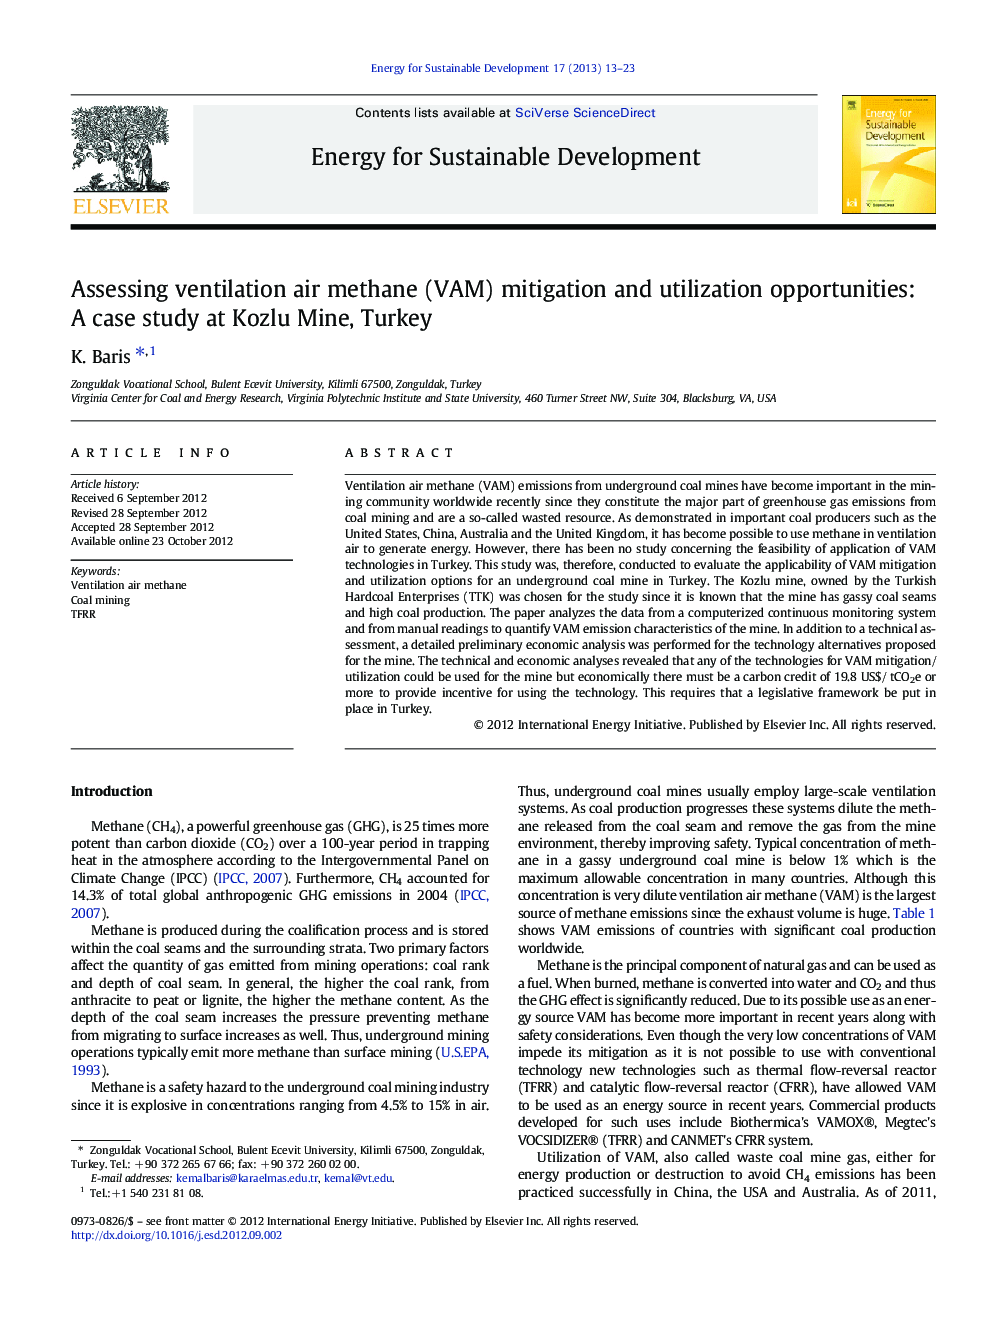 Assessing ventilation air methane (VAM) mitigation and utilization opportunities: A case study at Kozlu Mine, Turkey